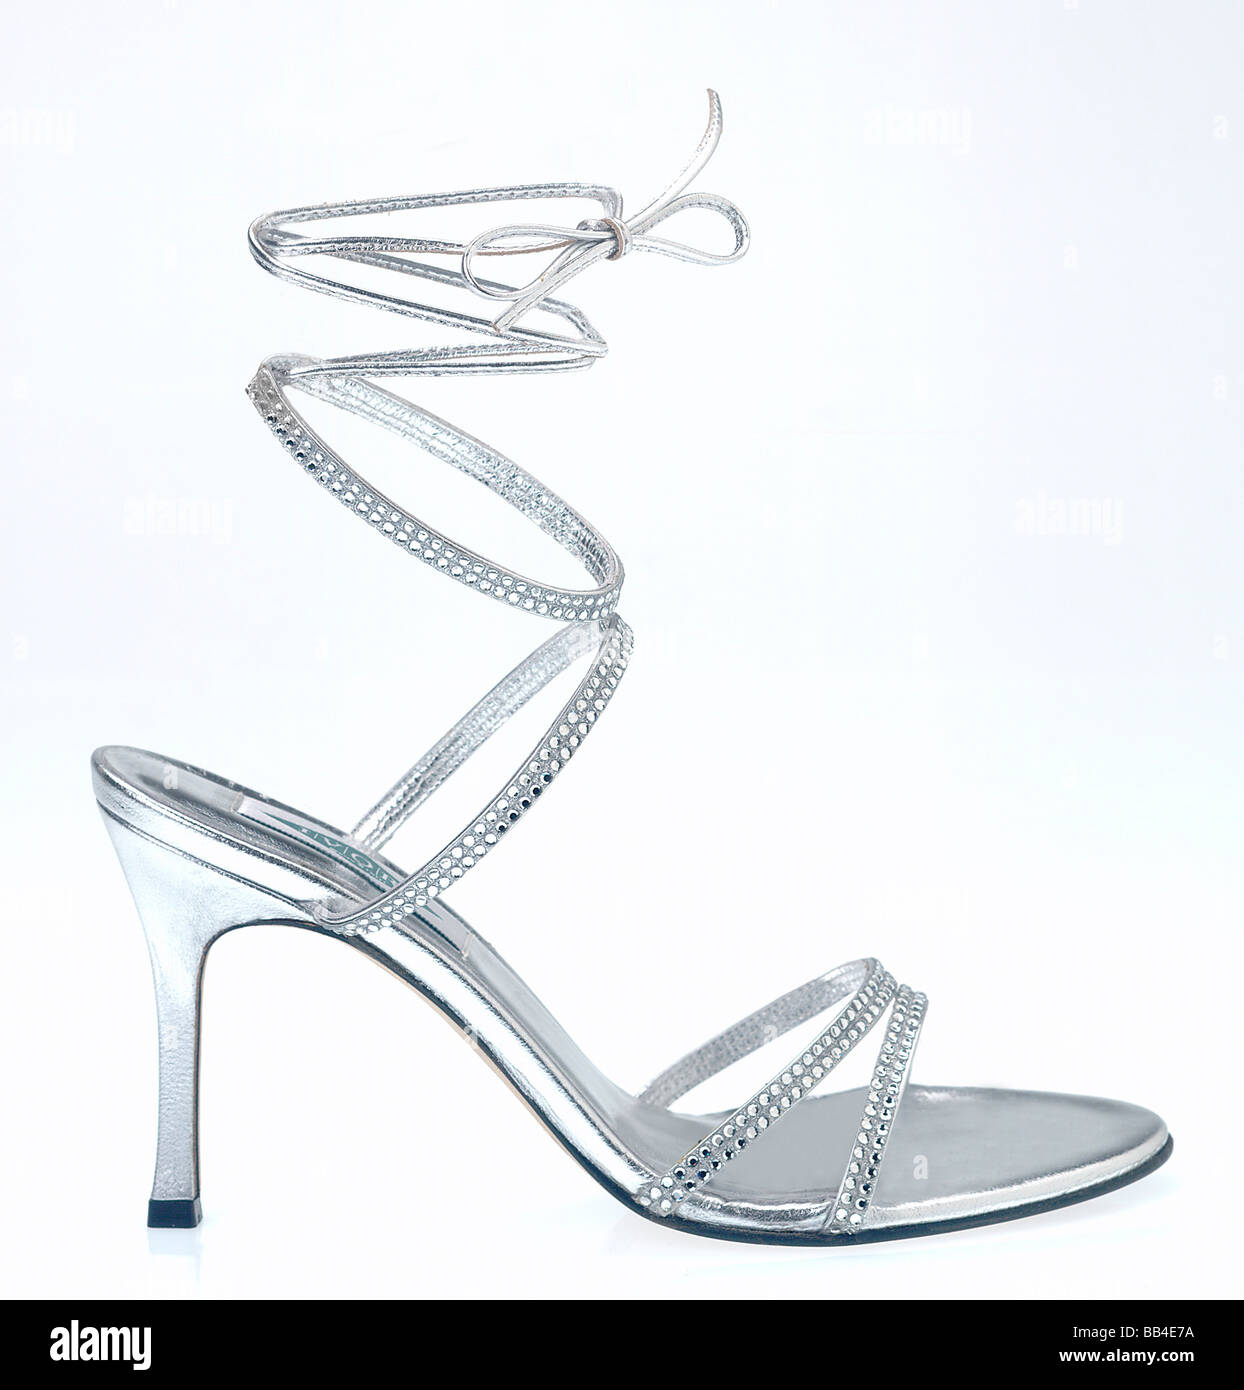 Ladies fashion shoe on white background Stock Photo - Alamy